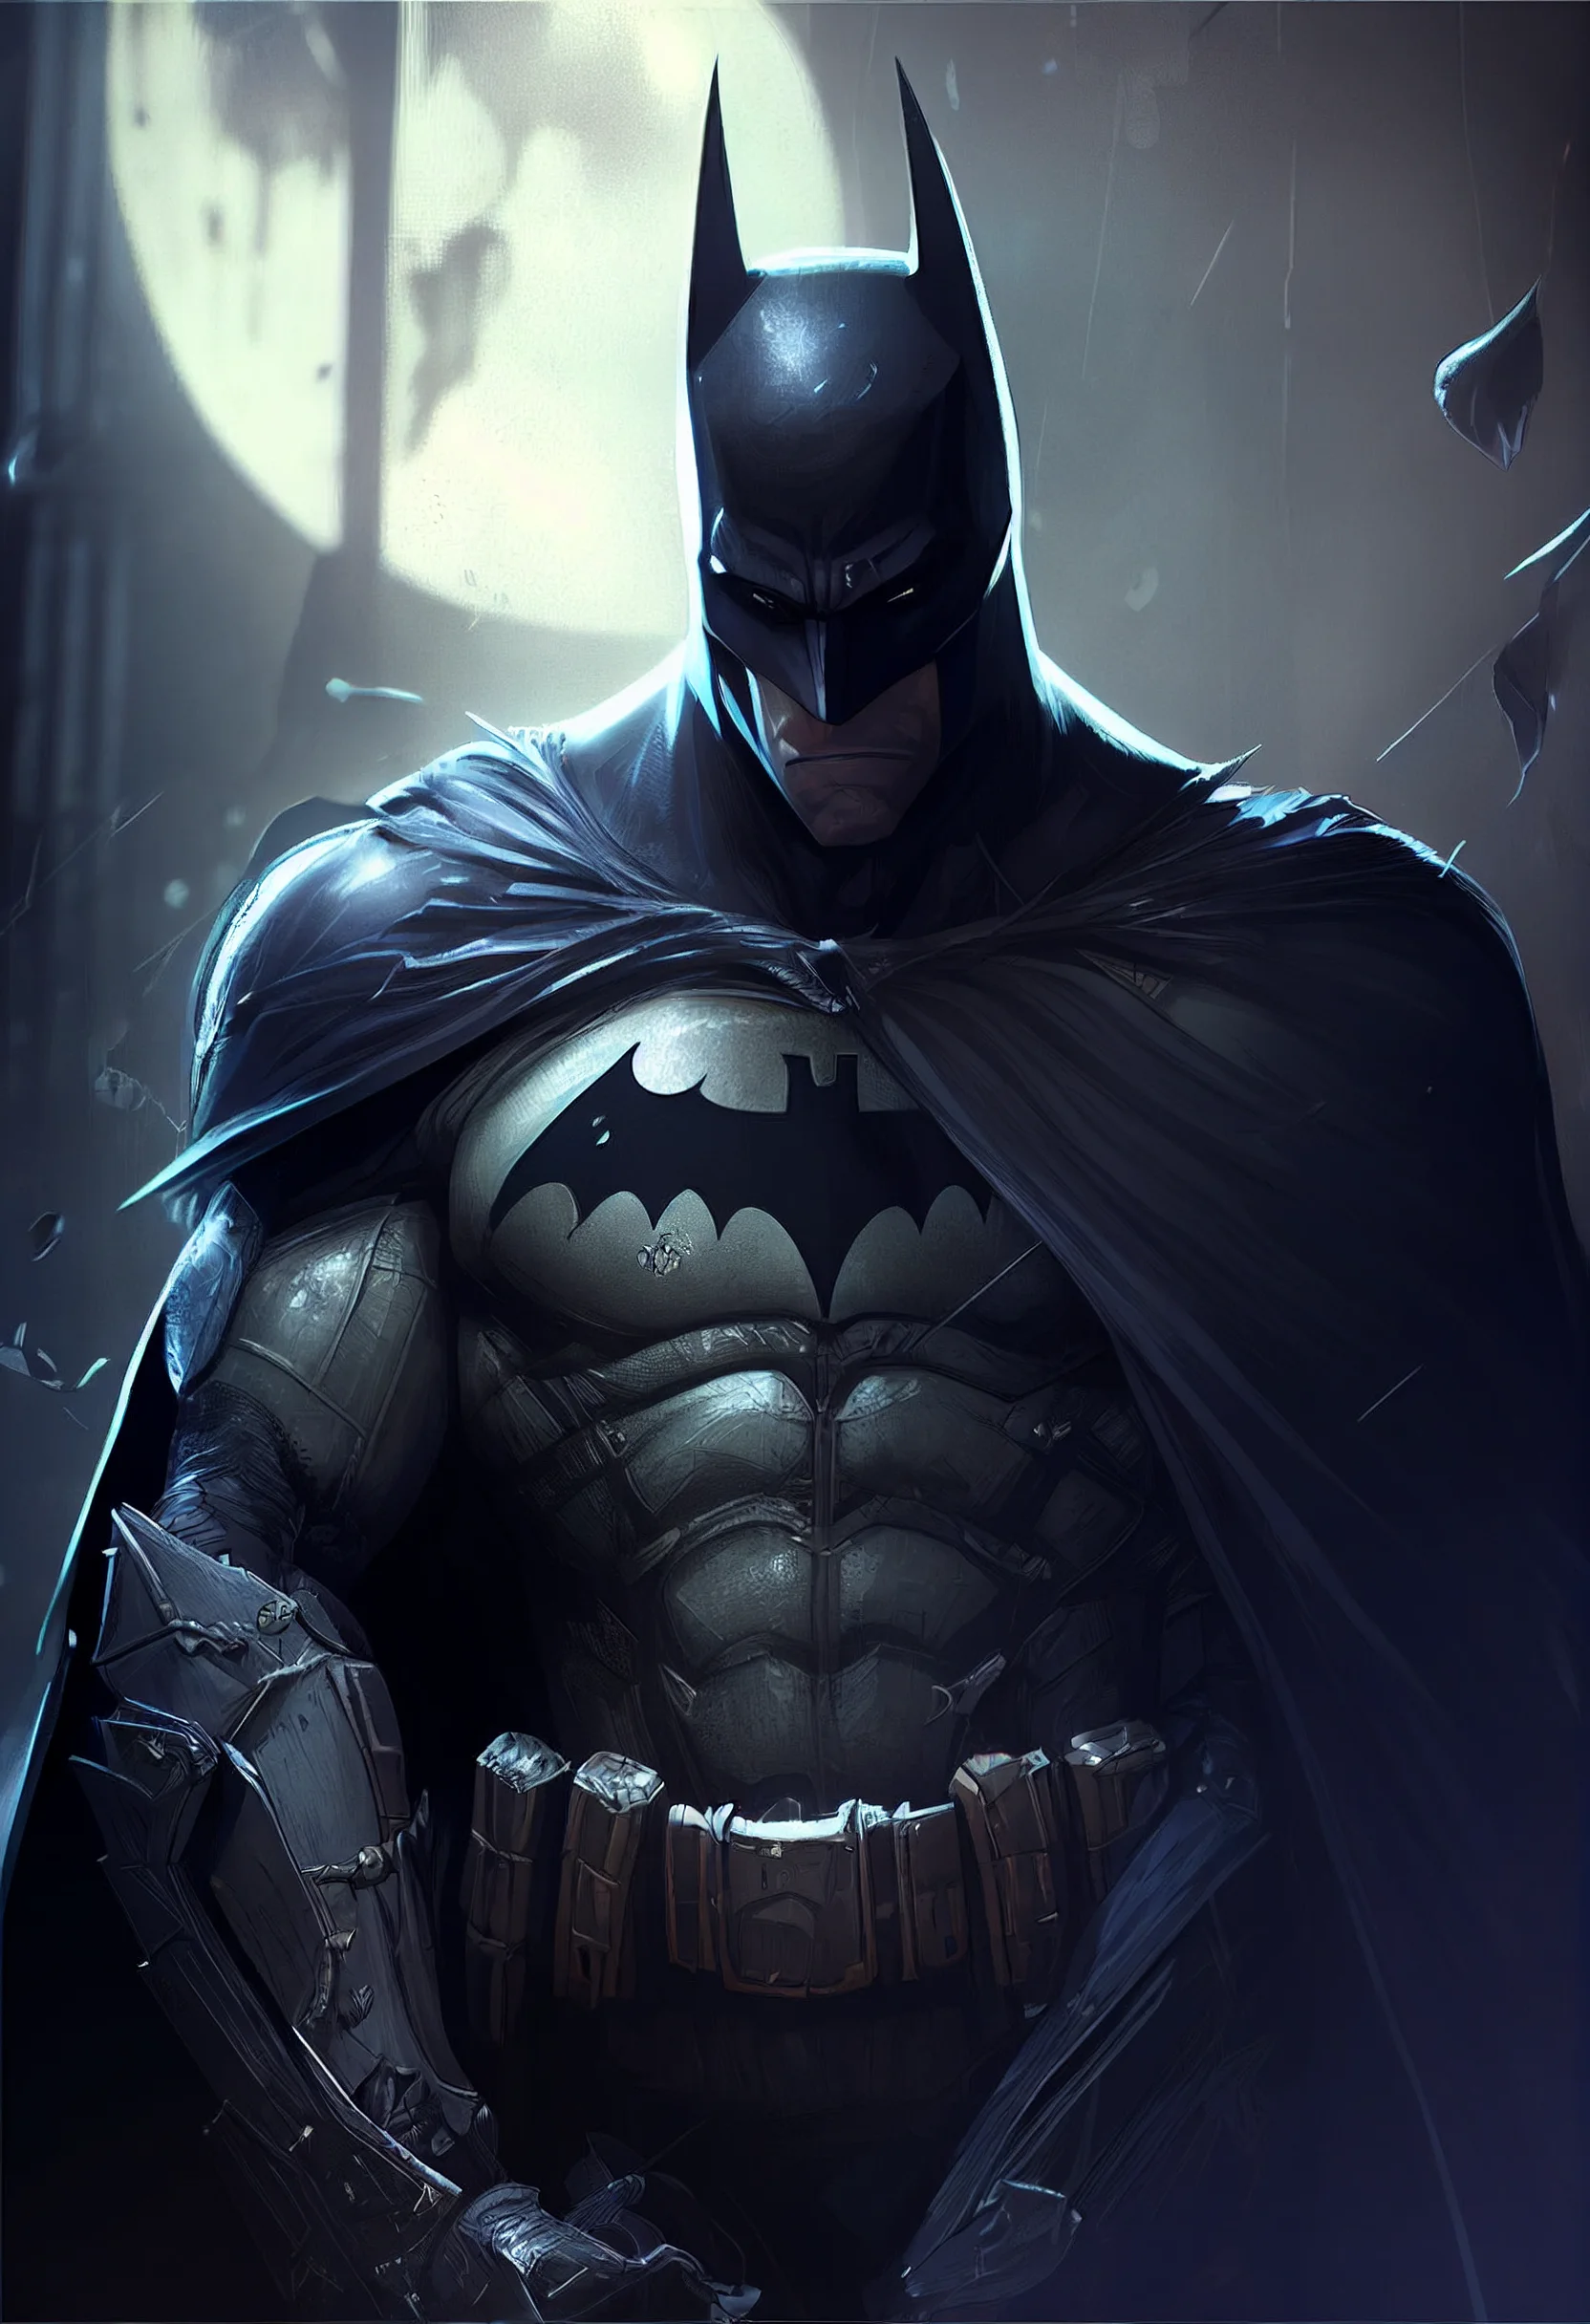 Batman standing in the rain with a cape - Batman